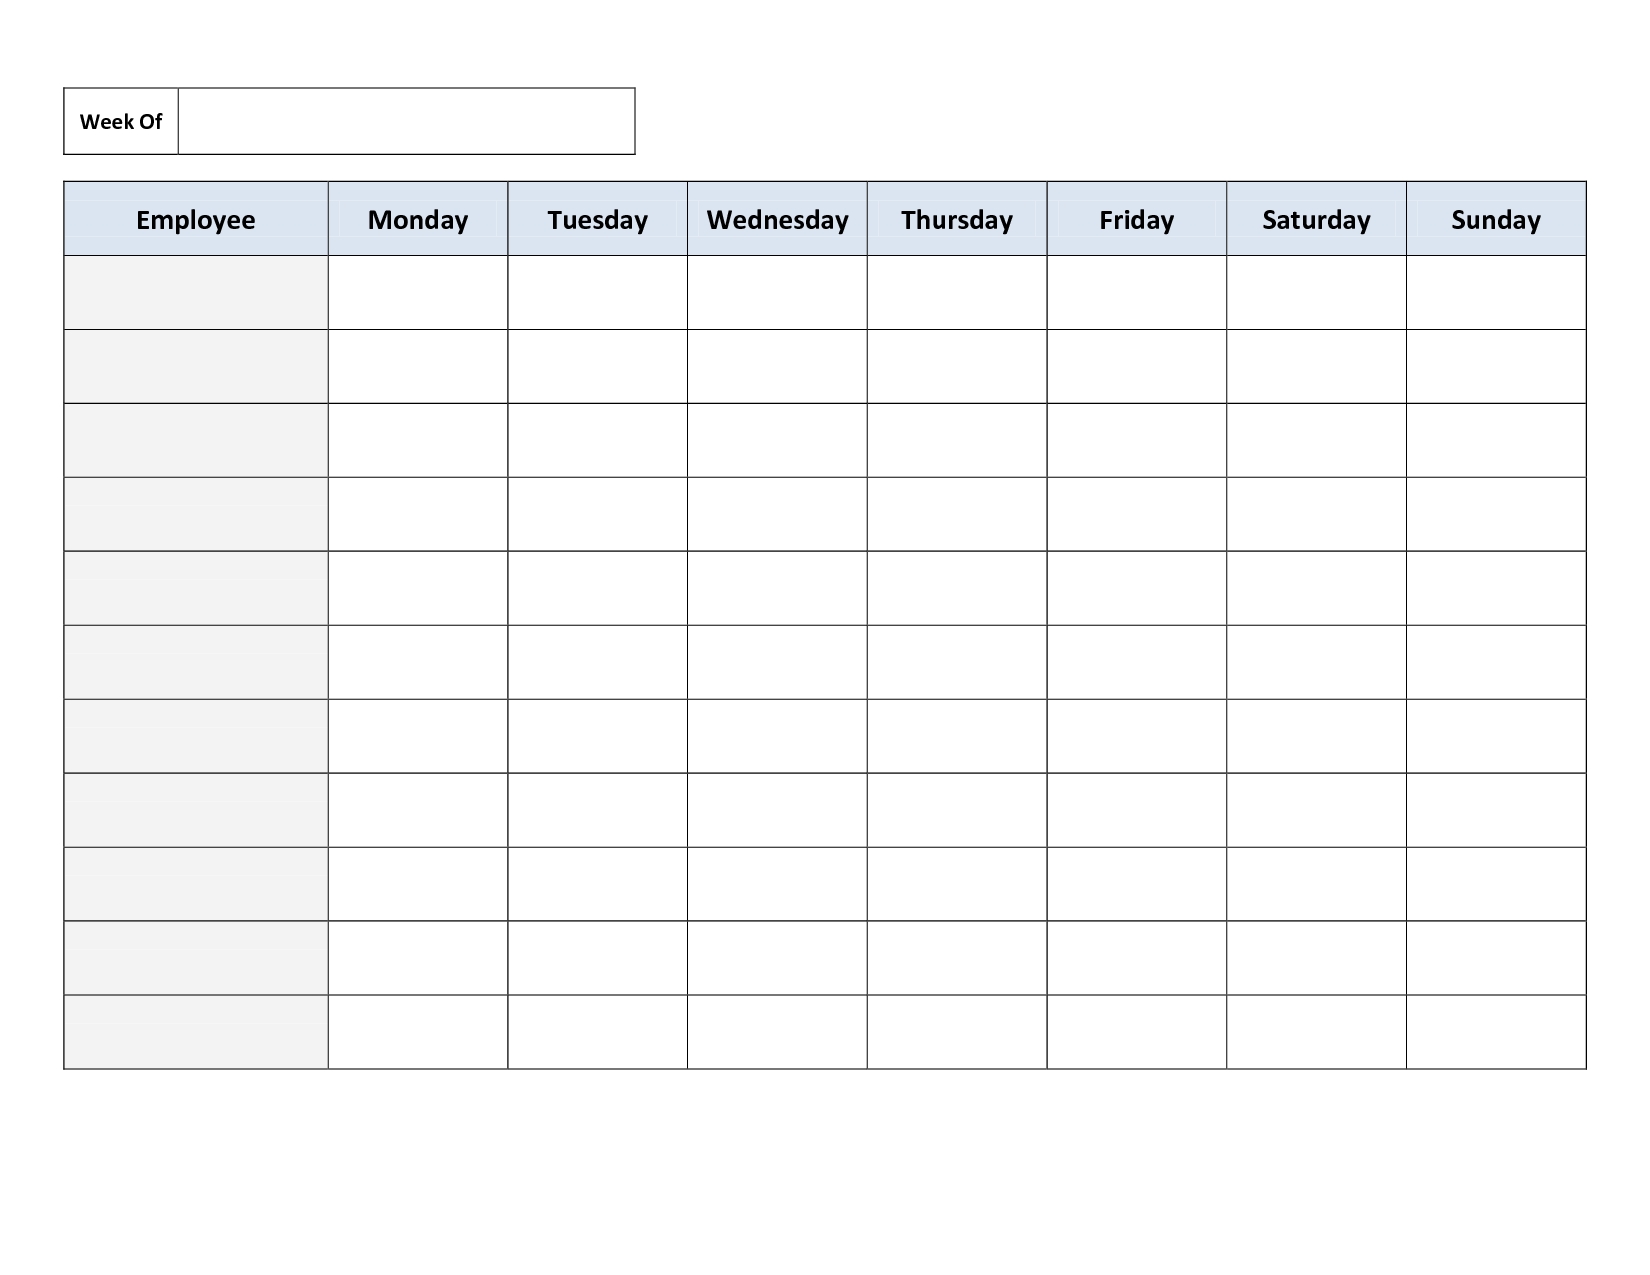 Weekly Employee Work Schedule Template. Free Blank Schedule